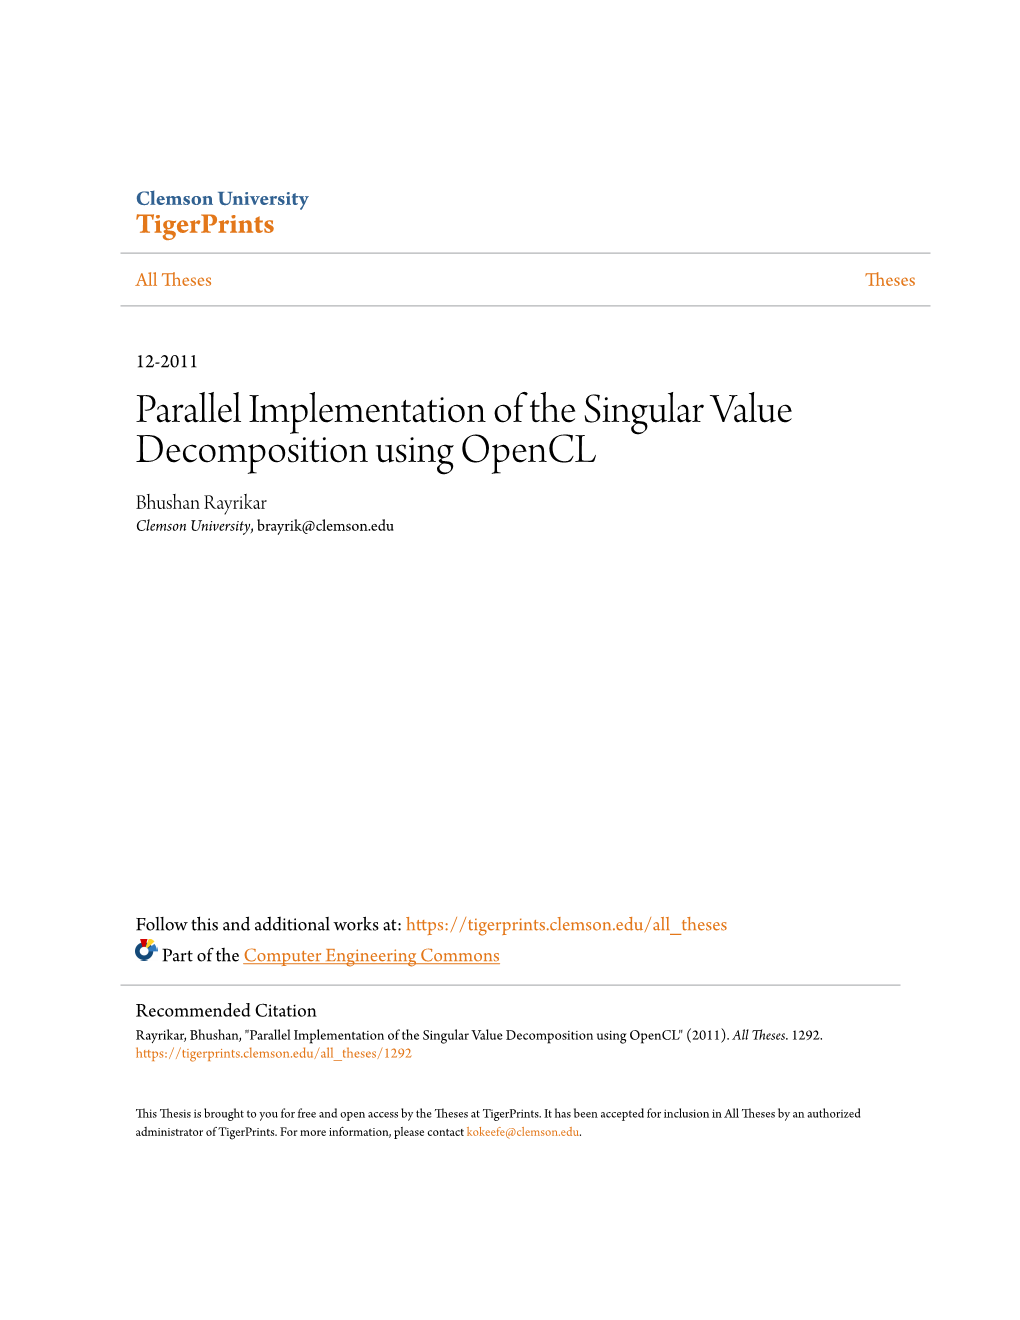 Parallel Implementation of the Singular Value Decomposition Using Opencl Bhushan Rayrikar Clemson University, Brayrik@Clemson.Edu